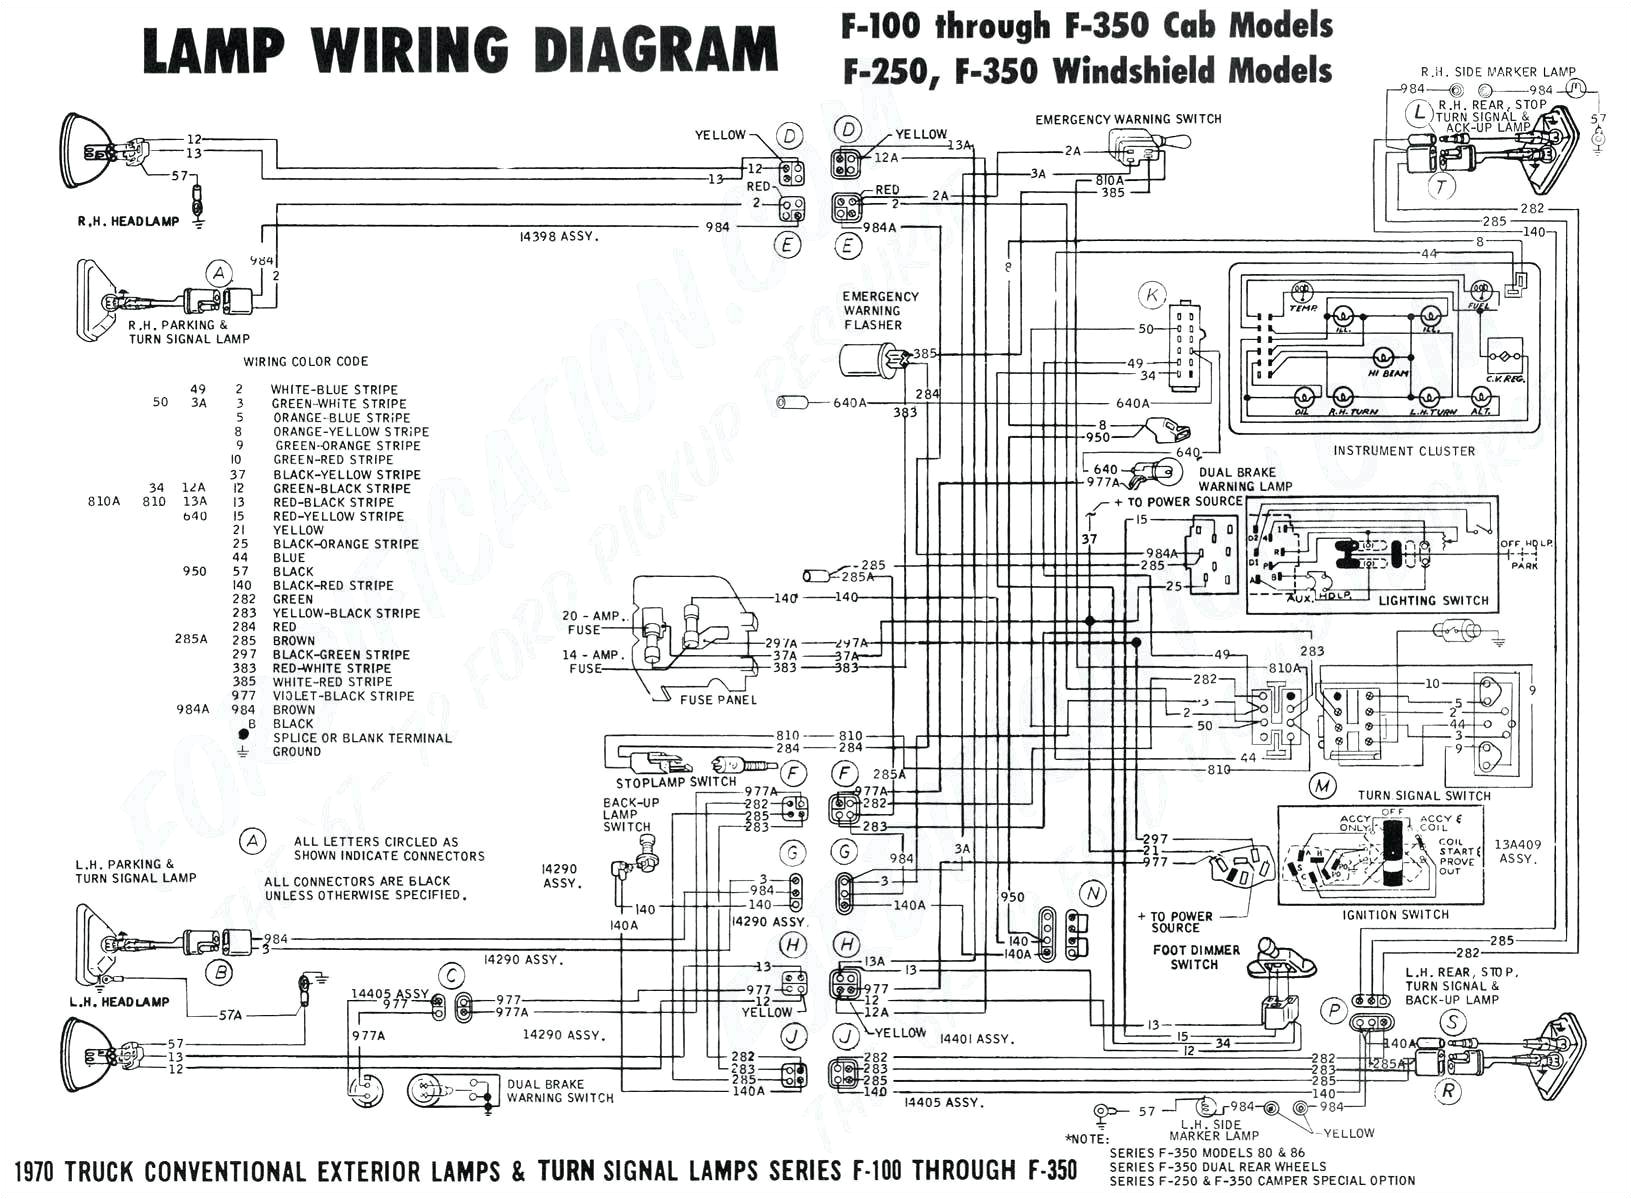 eagle trailer wiring diagram wiring diagram load eagle trailer wiring diagram eagle trailer wiring diagram